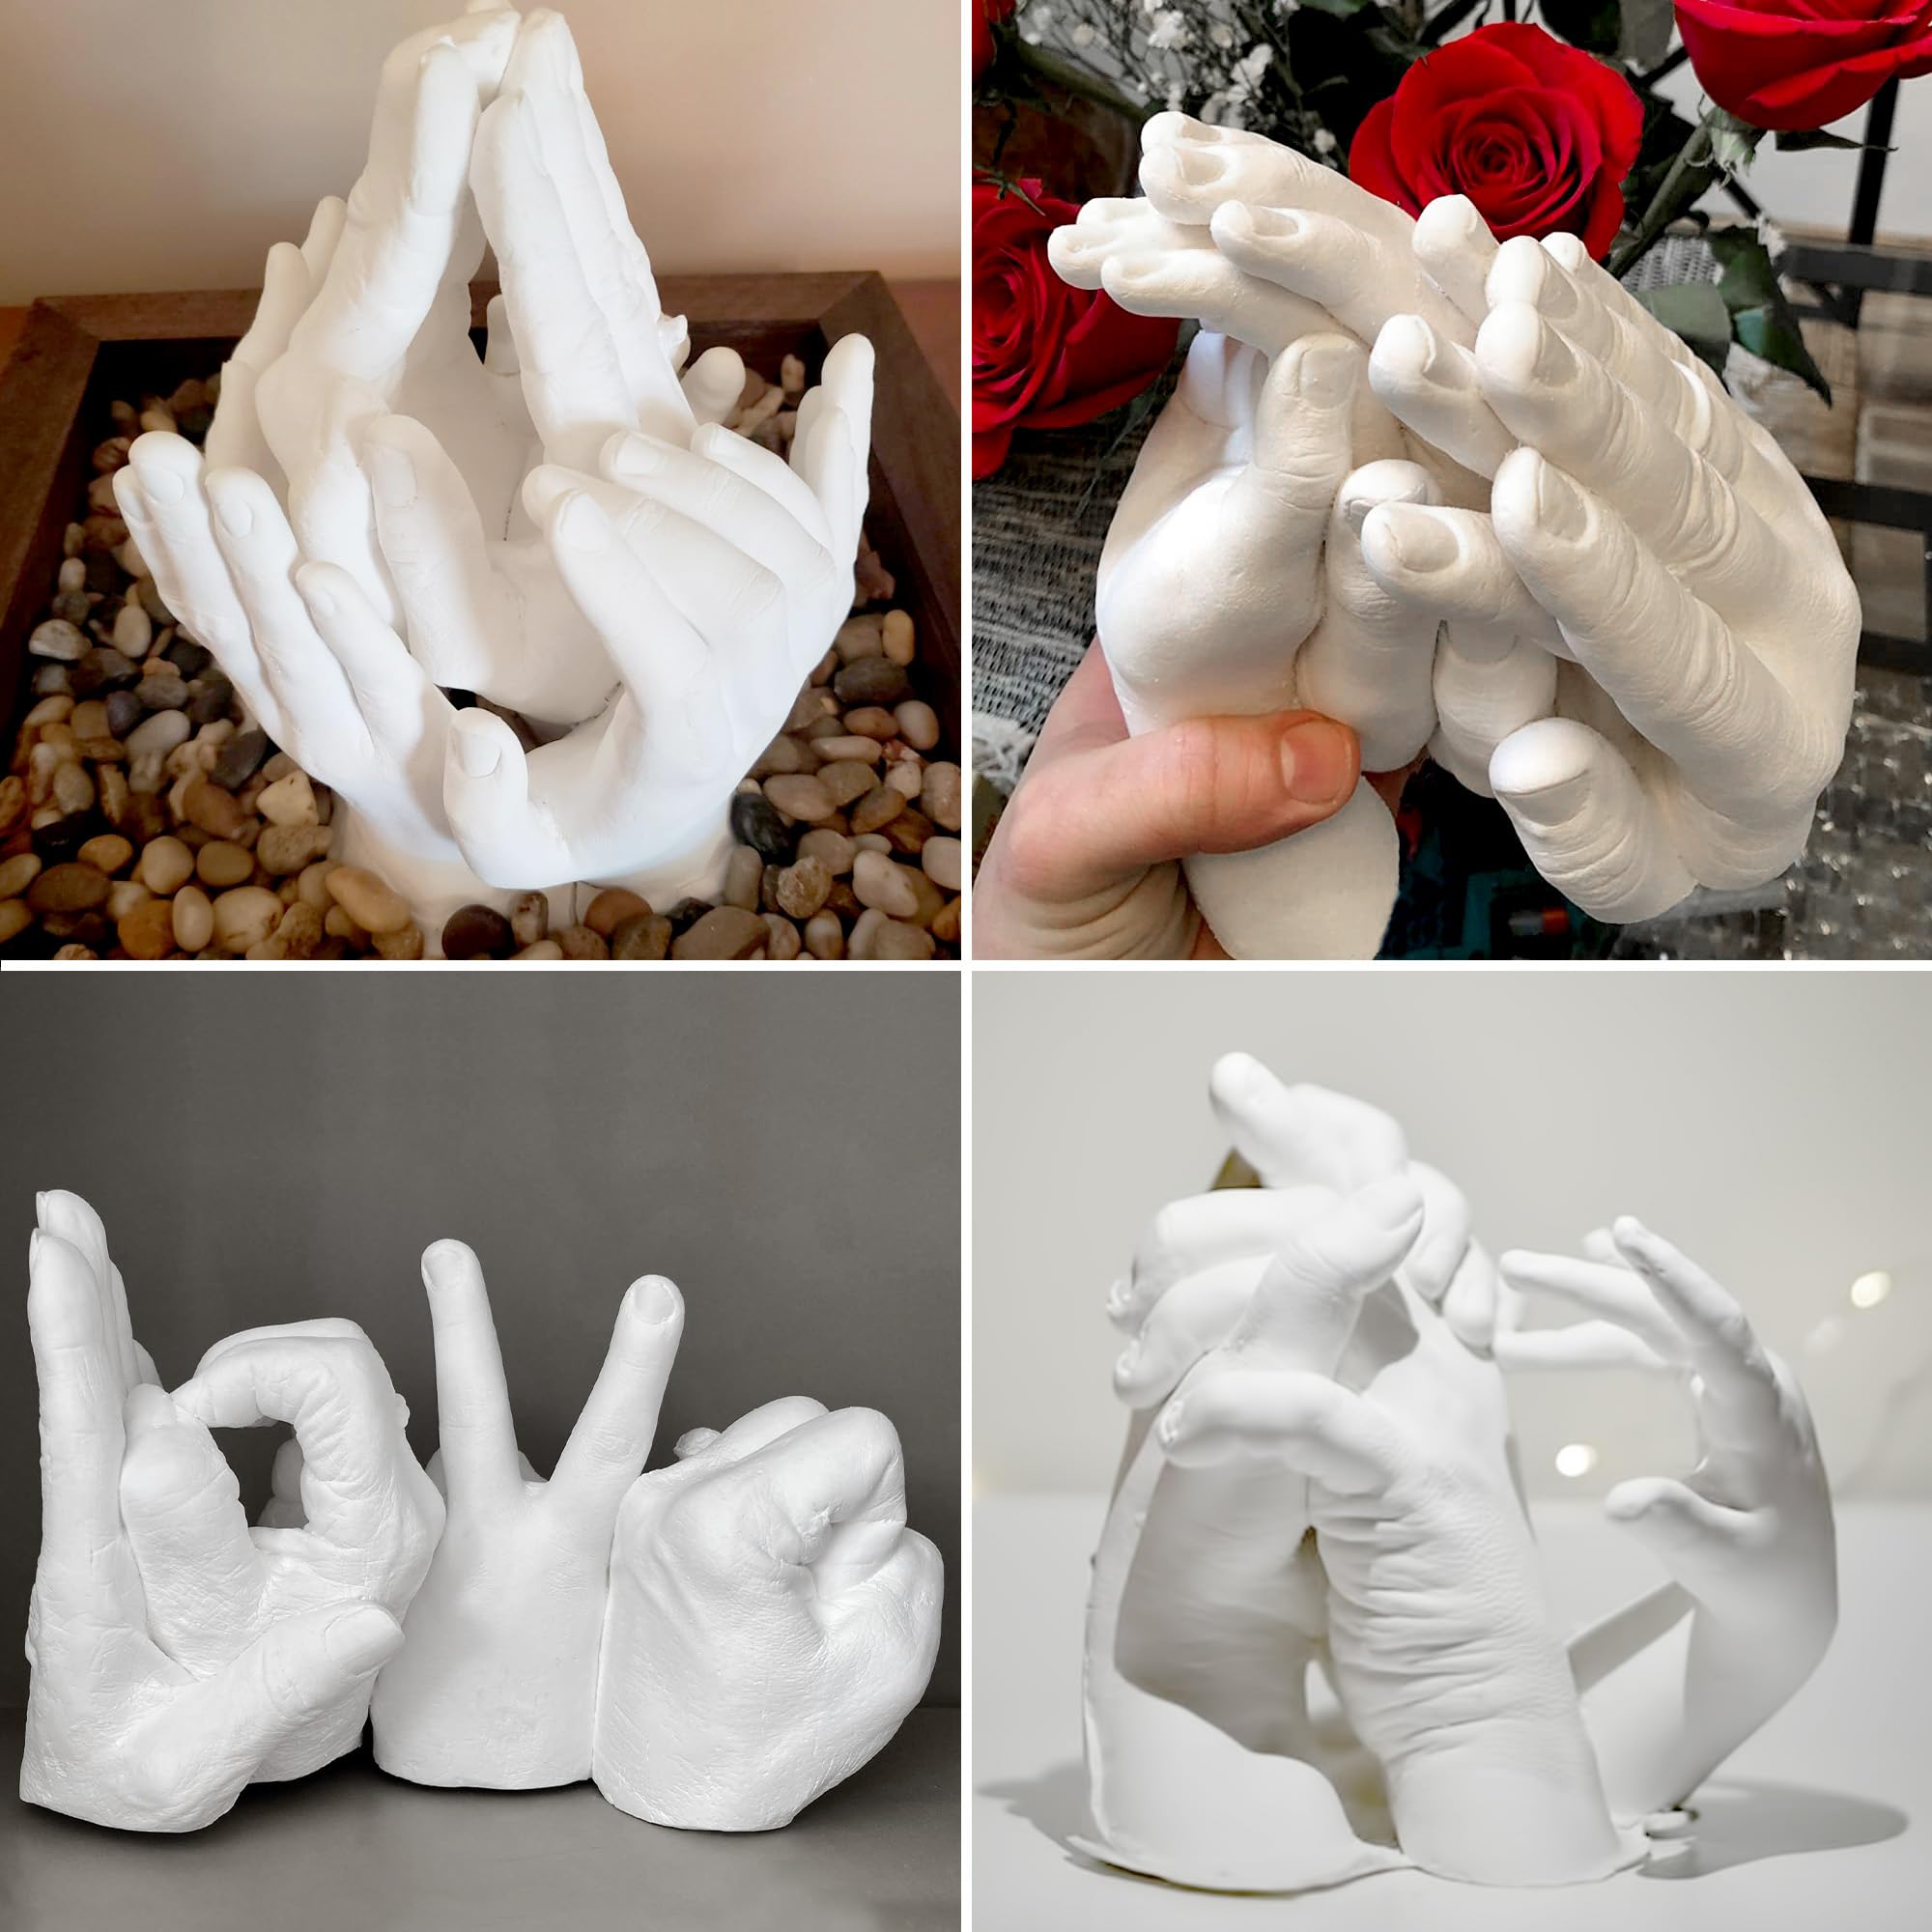 11 Family Hand Mold Ideas  hand molding, hand sculpture, families hands